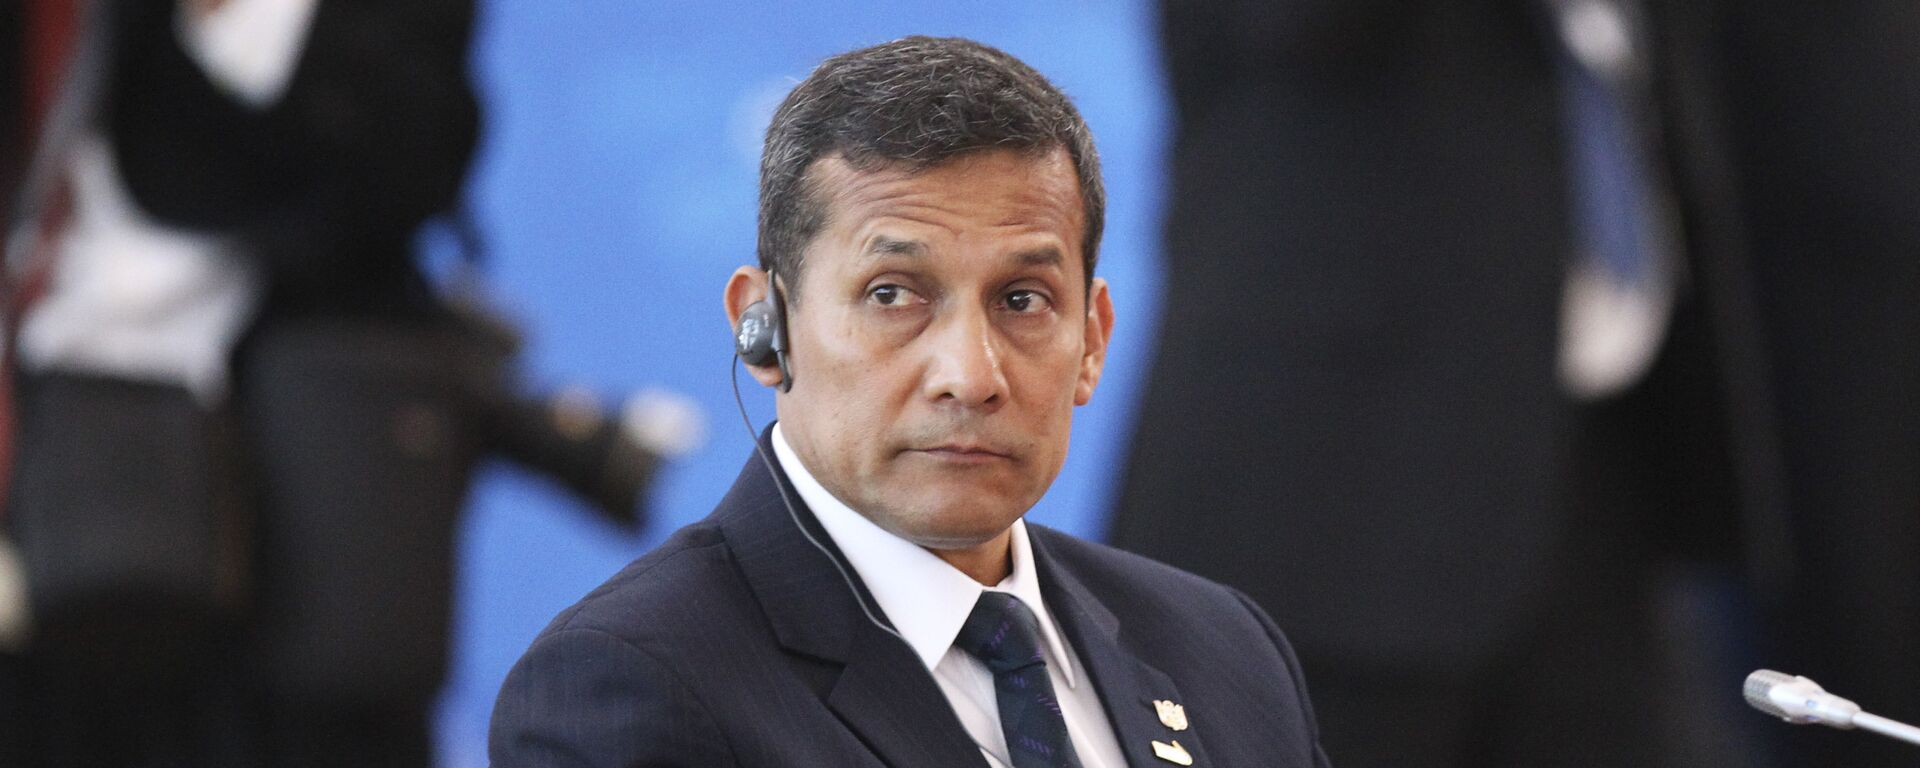 El expresidente de Perú Ollanta Humala  - Sputnik Mundo, 1920, 27.10.2020